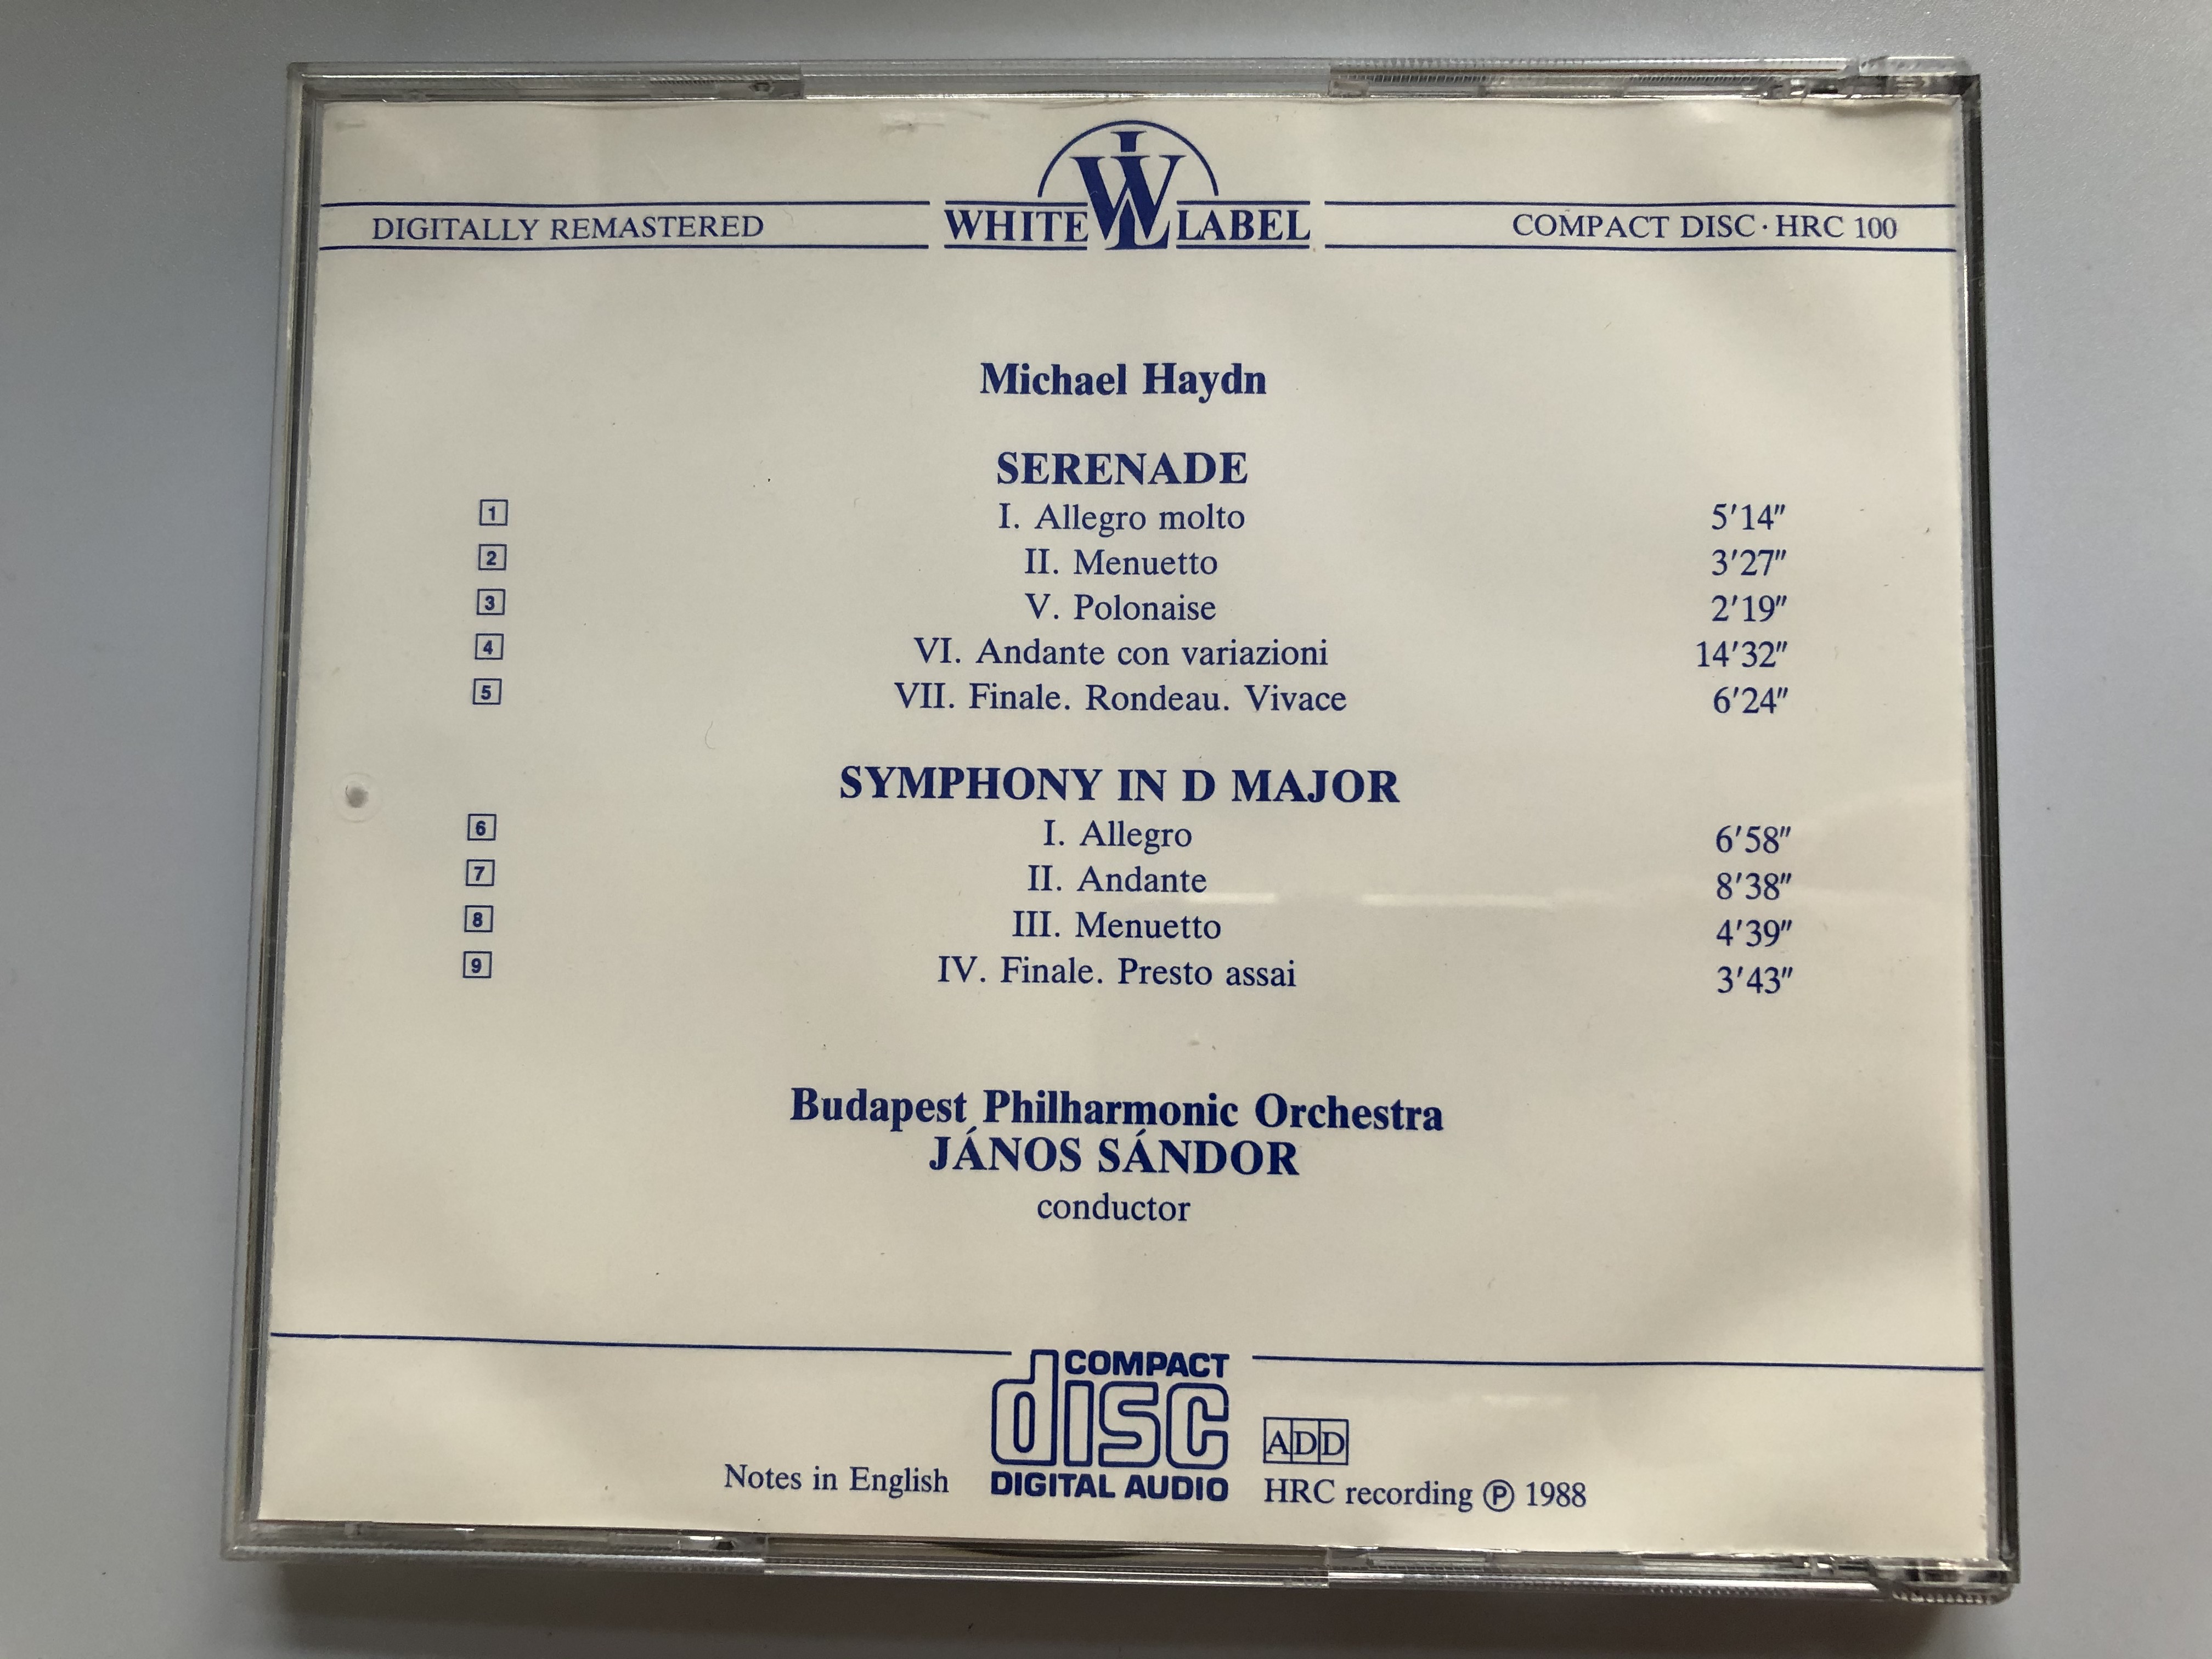 michael-haydn-serenade-symphony-in-d-major-budapest-philharmonic-orchestra-janos-sandor-hungaroton-audio-cd-1988-stereo-hrc-100-5-.jpg